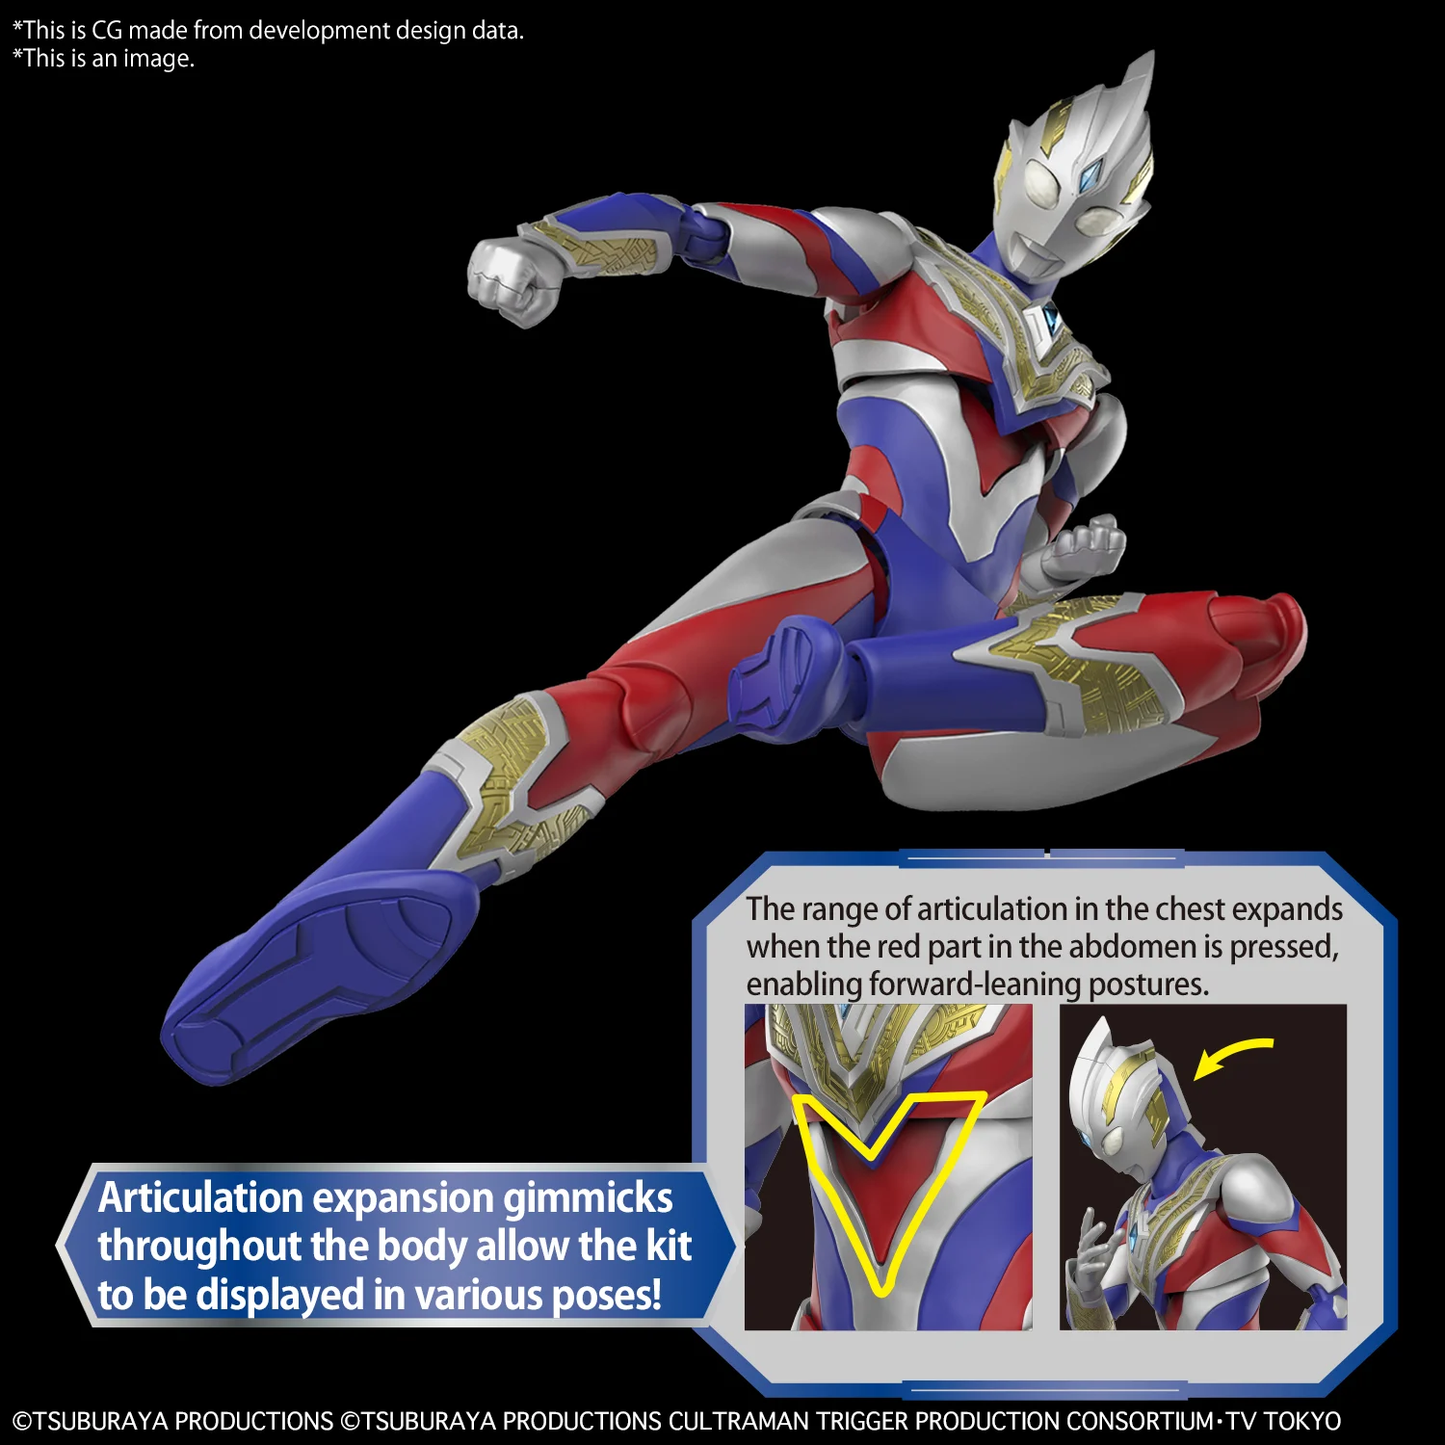 ULTRAMAN - Figure-Rise STD - Ultraman Trigger Multi Type